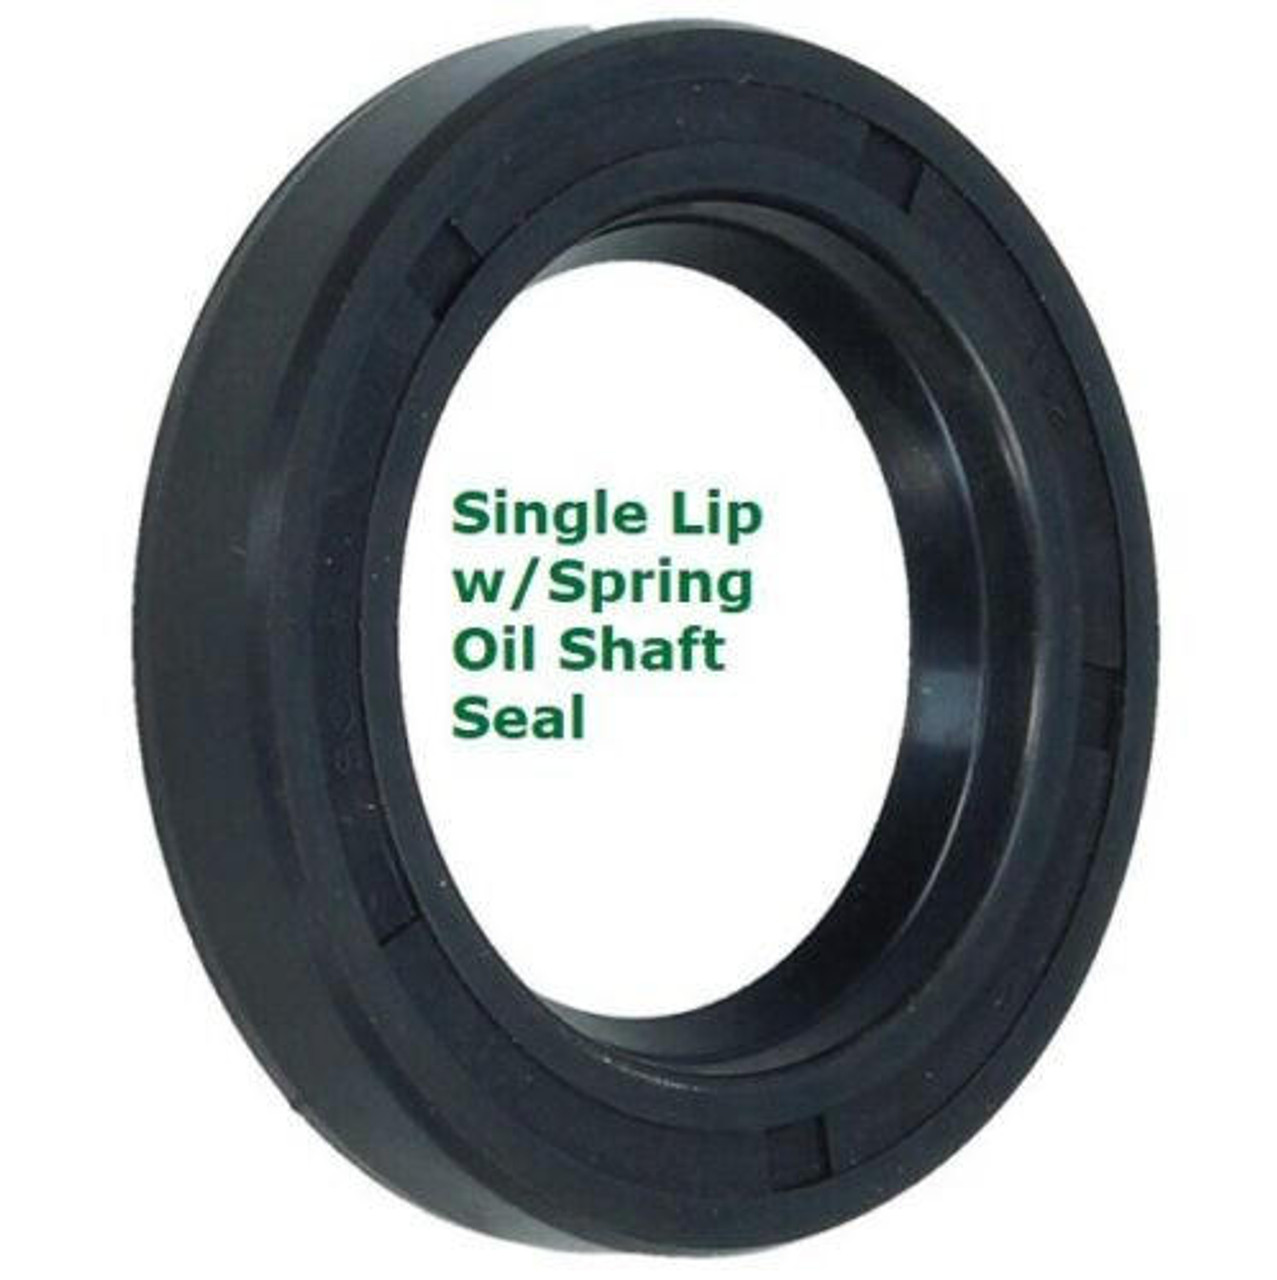 Metric Oil Shaft Seal 75 x 100 x 7mm Single Lip   Price for 1 pc